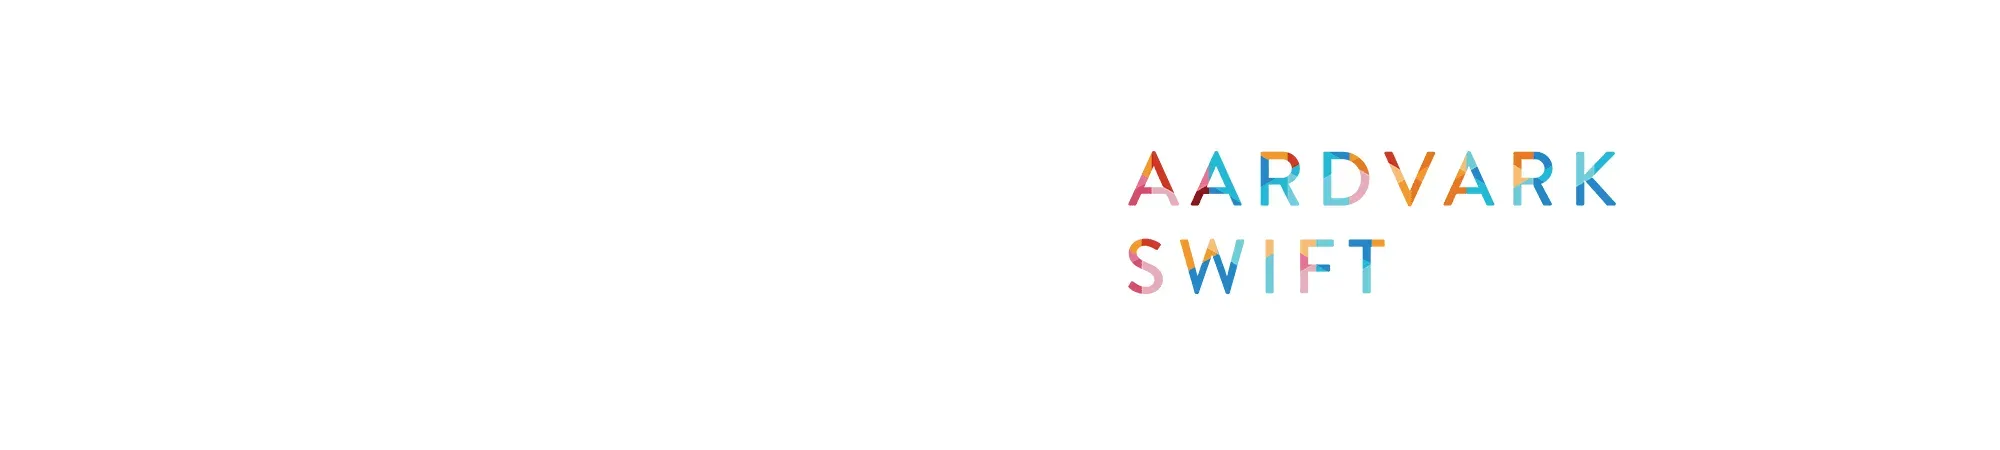 Header image with Aardvark Swift logo